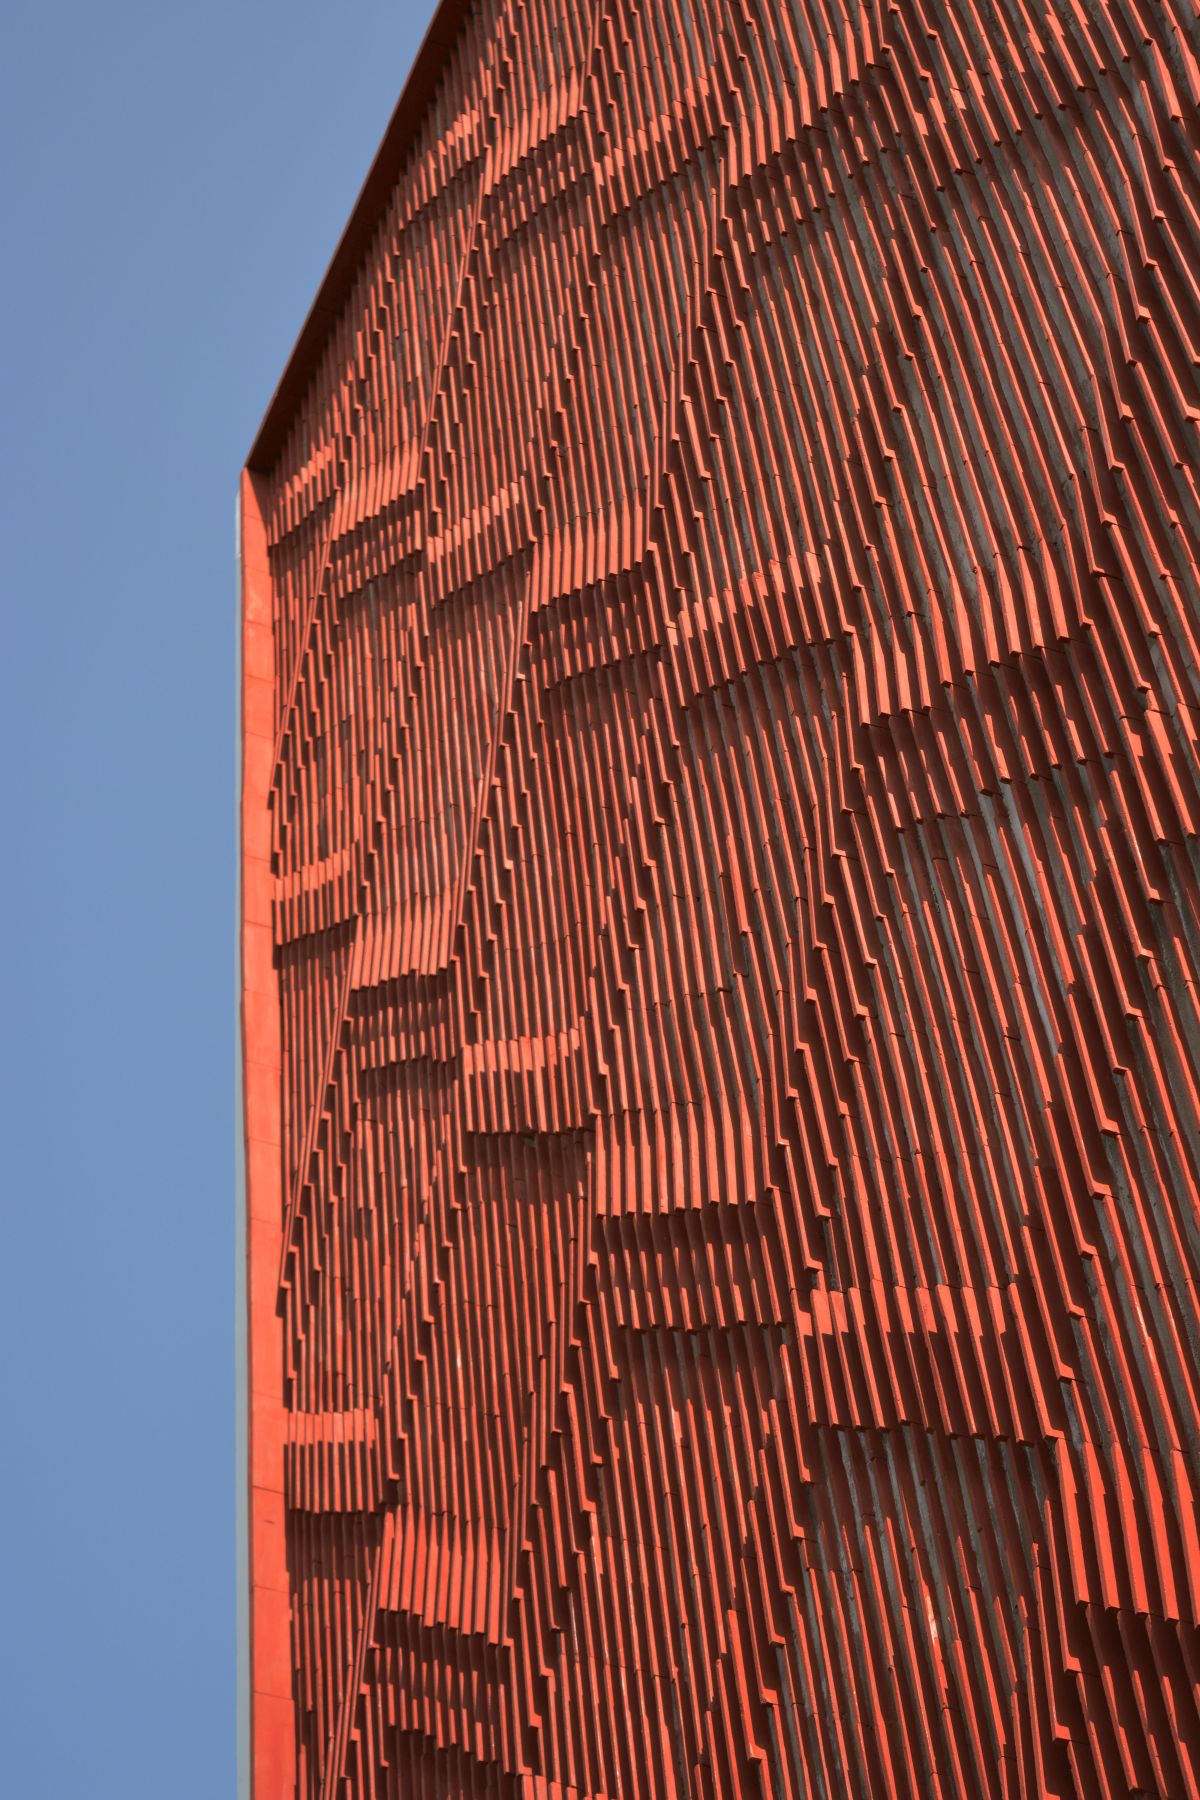 Clay roof tiles façade to minimize heat gain and has decorative function, at Vadodara, by Manoj Patel Design Studio 71